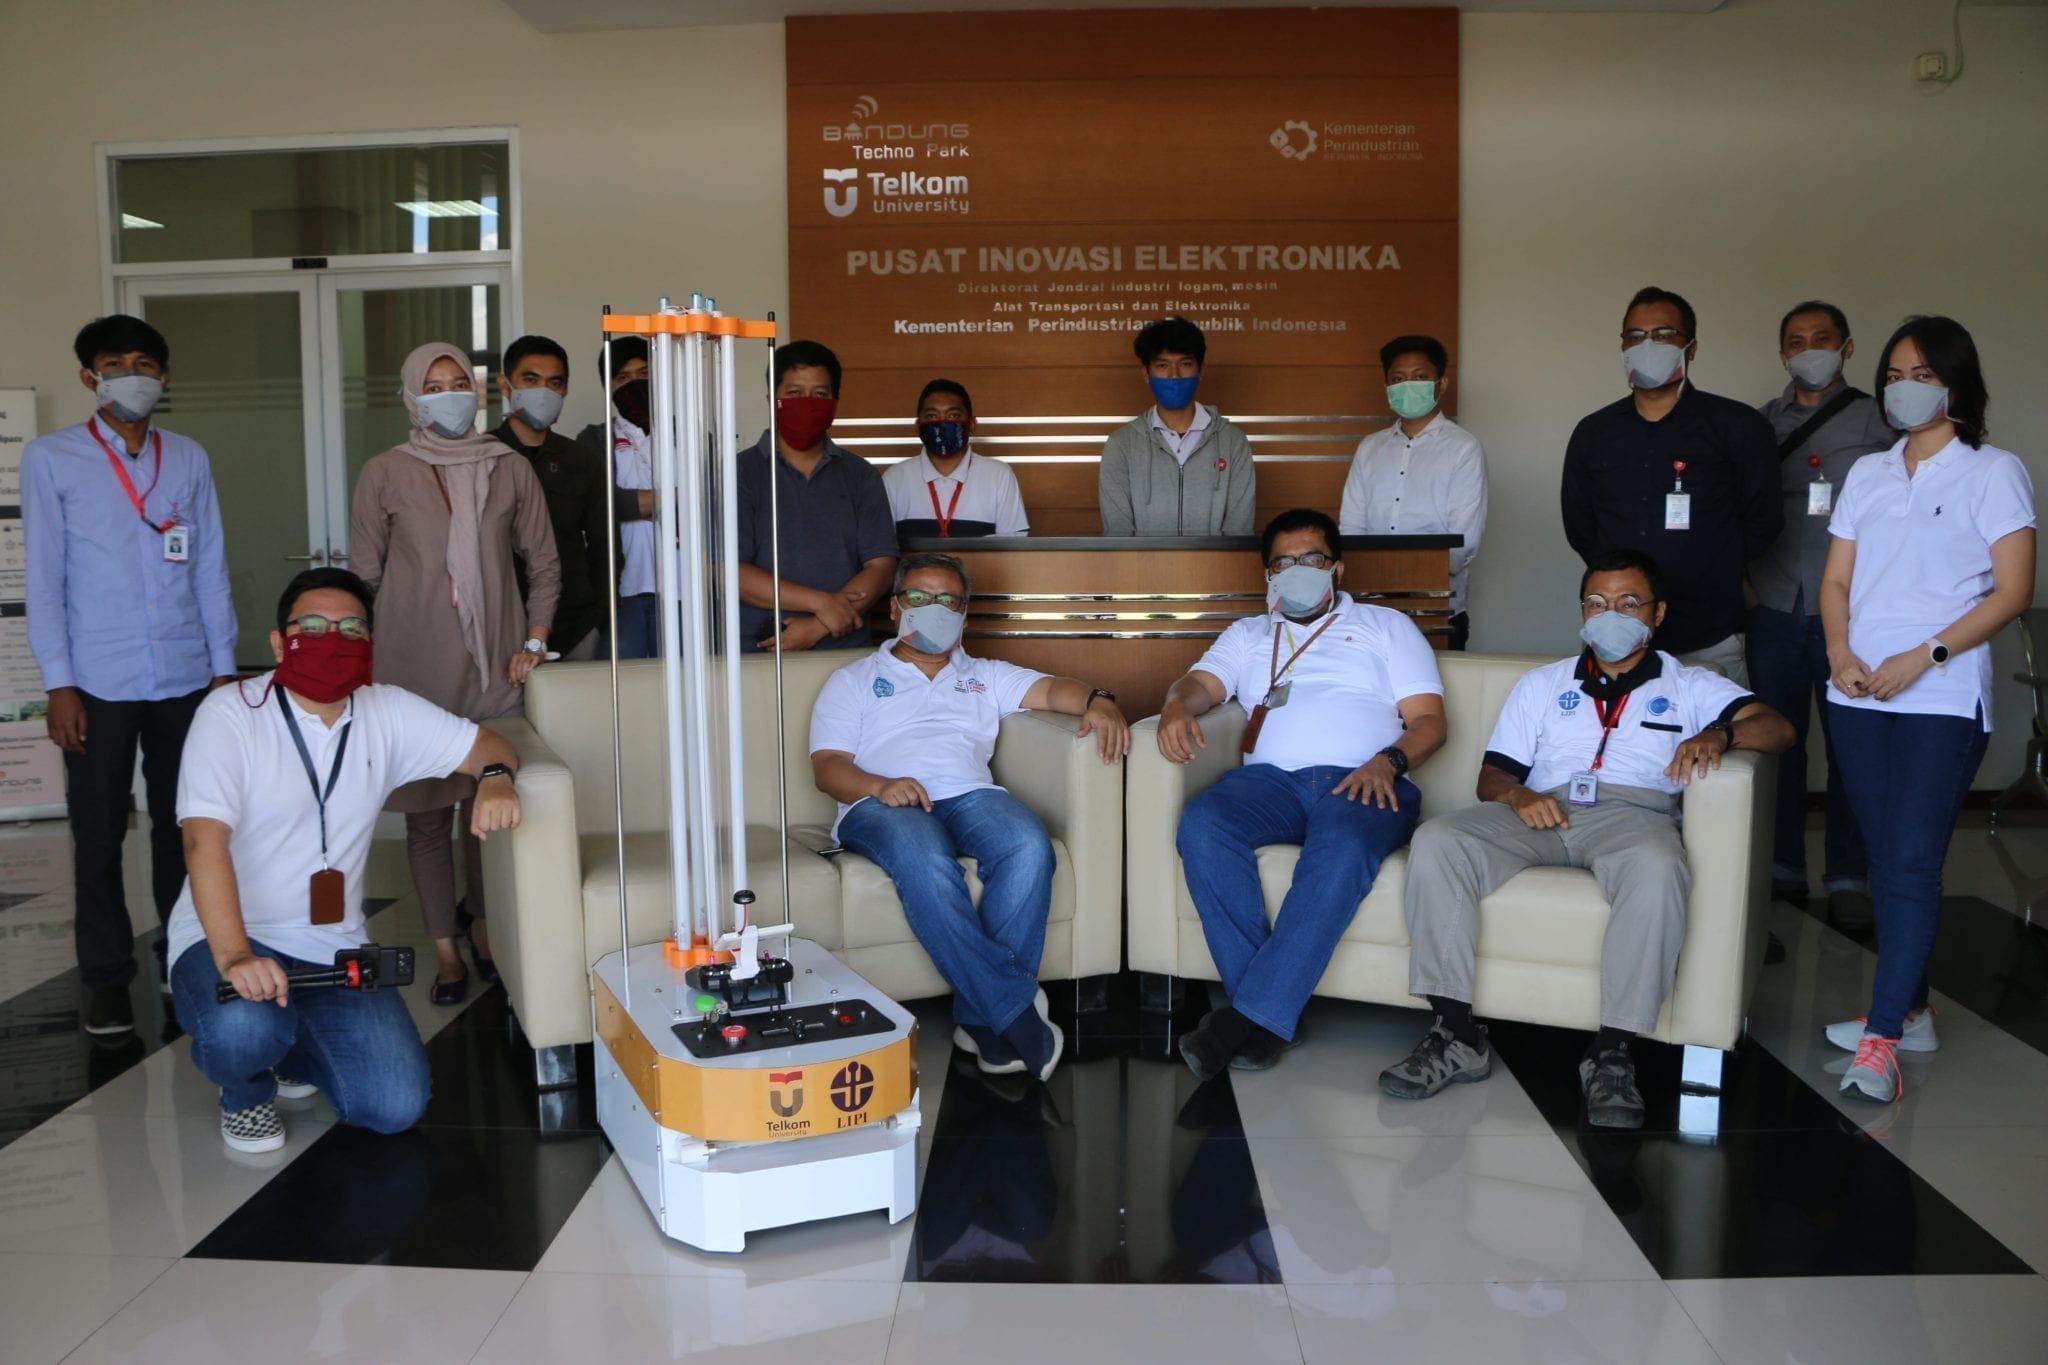 2. Robot AUMR Pertama di Indonesia